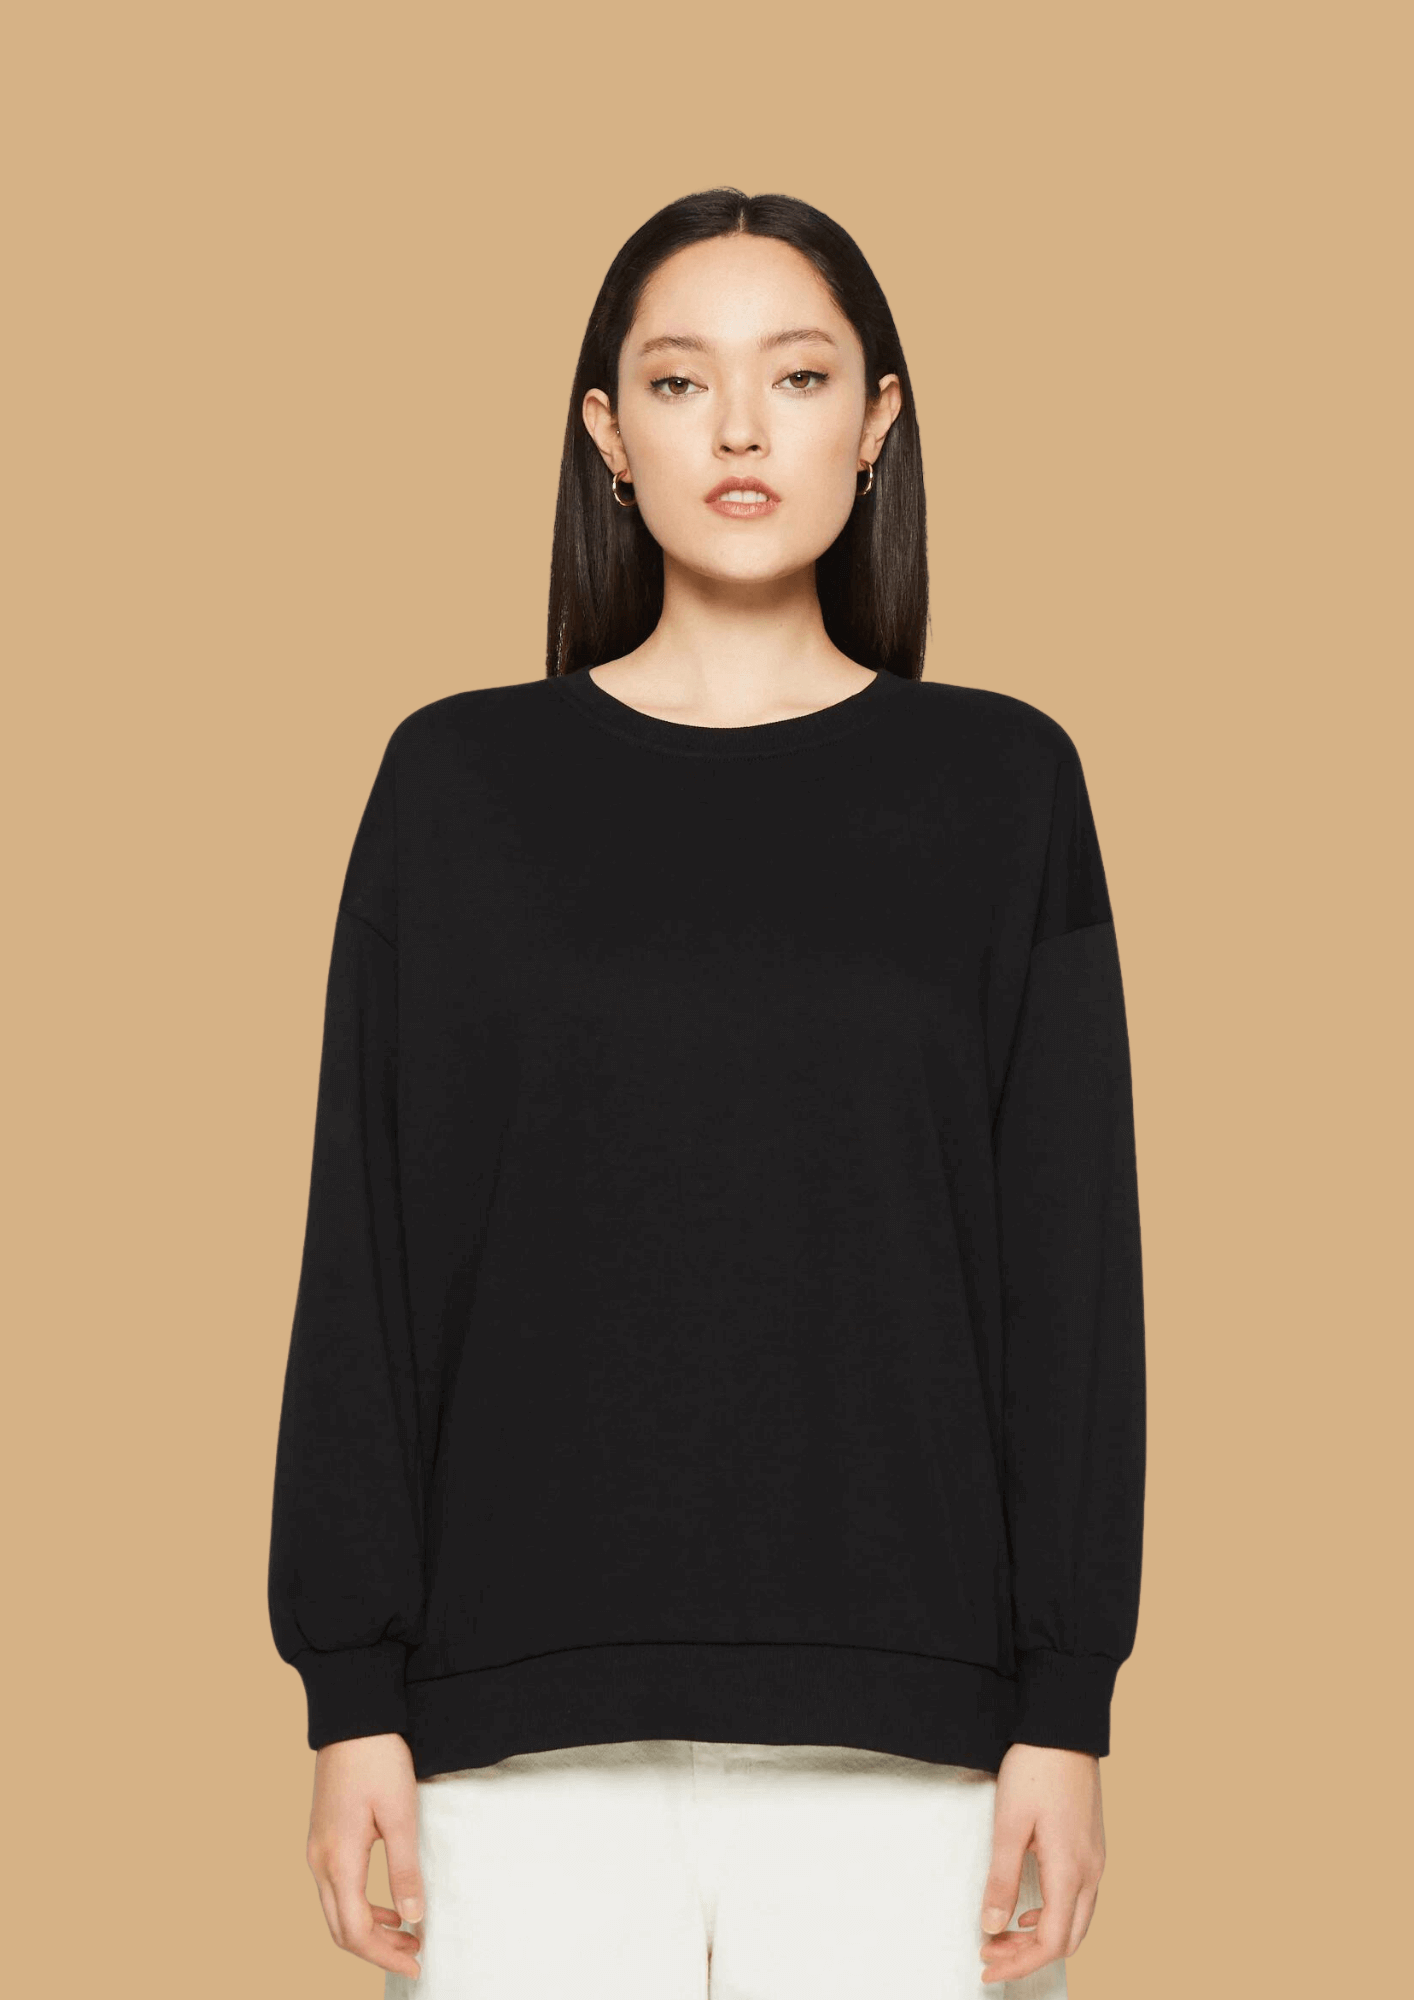 Women's black color sweatshirt by offmint